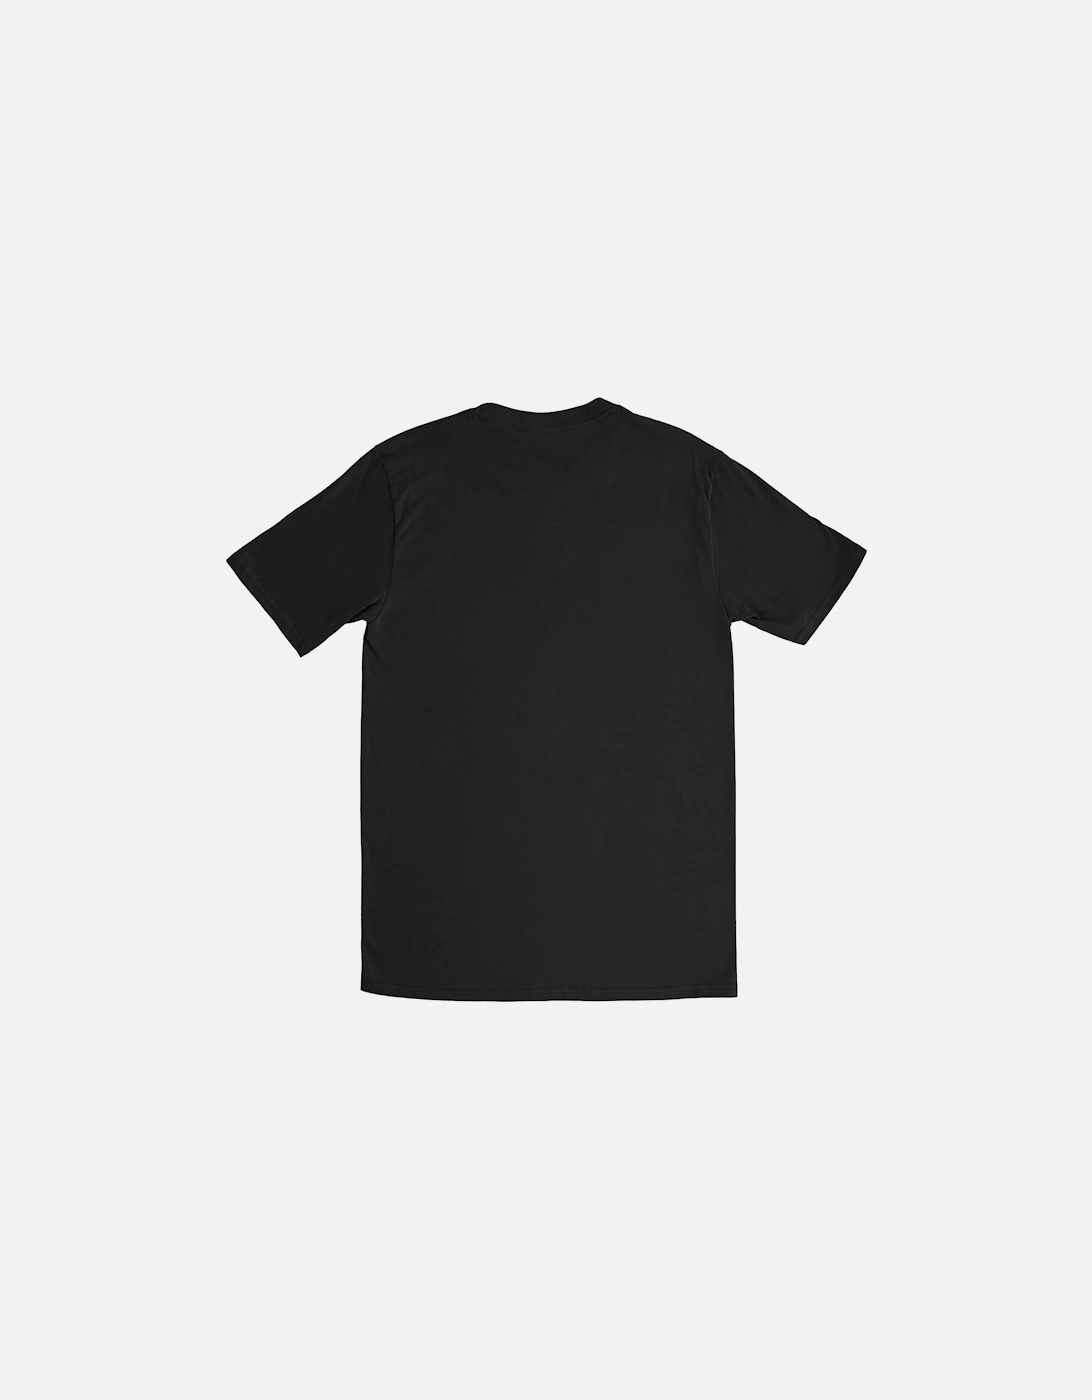 Unisex Adult Greatest Hits T-Shirt